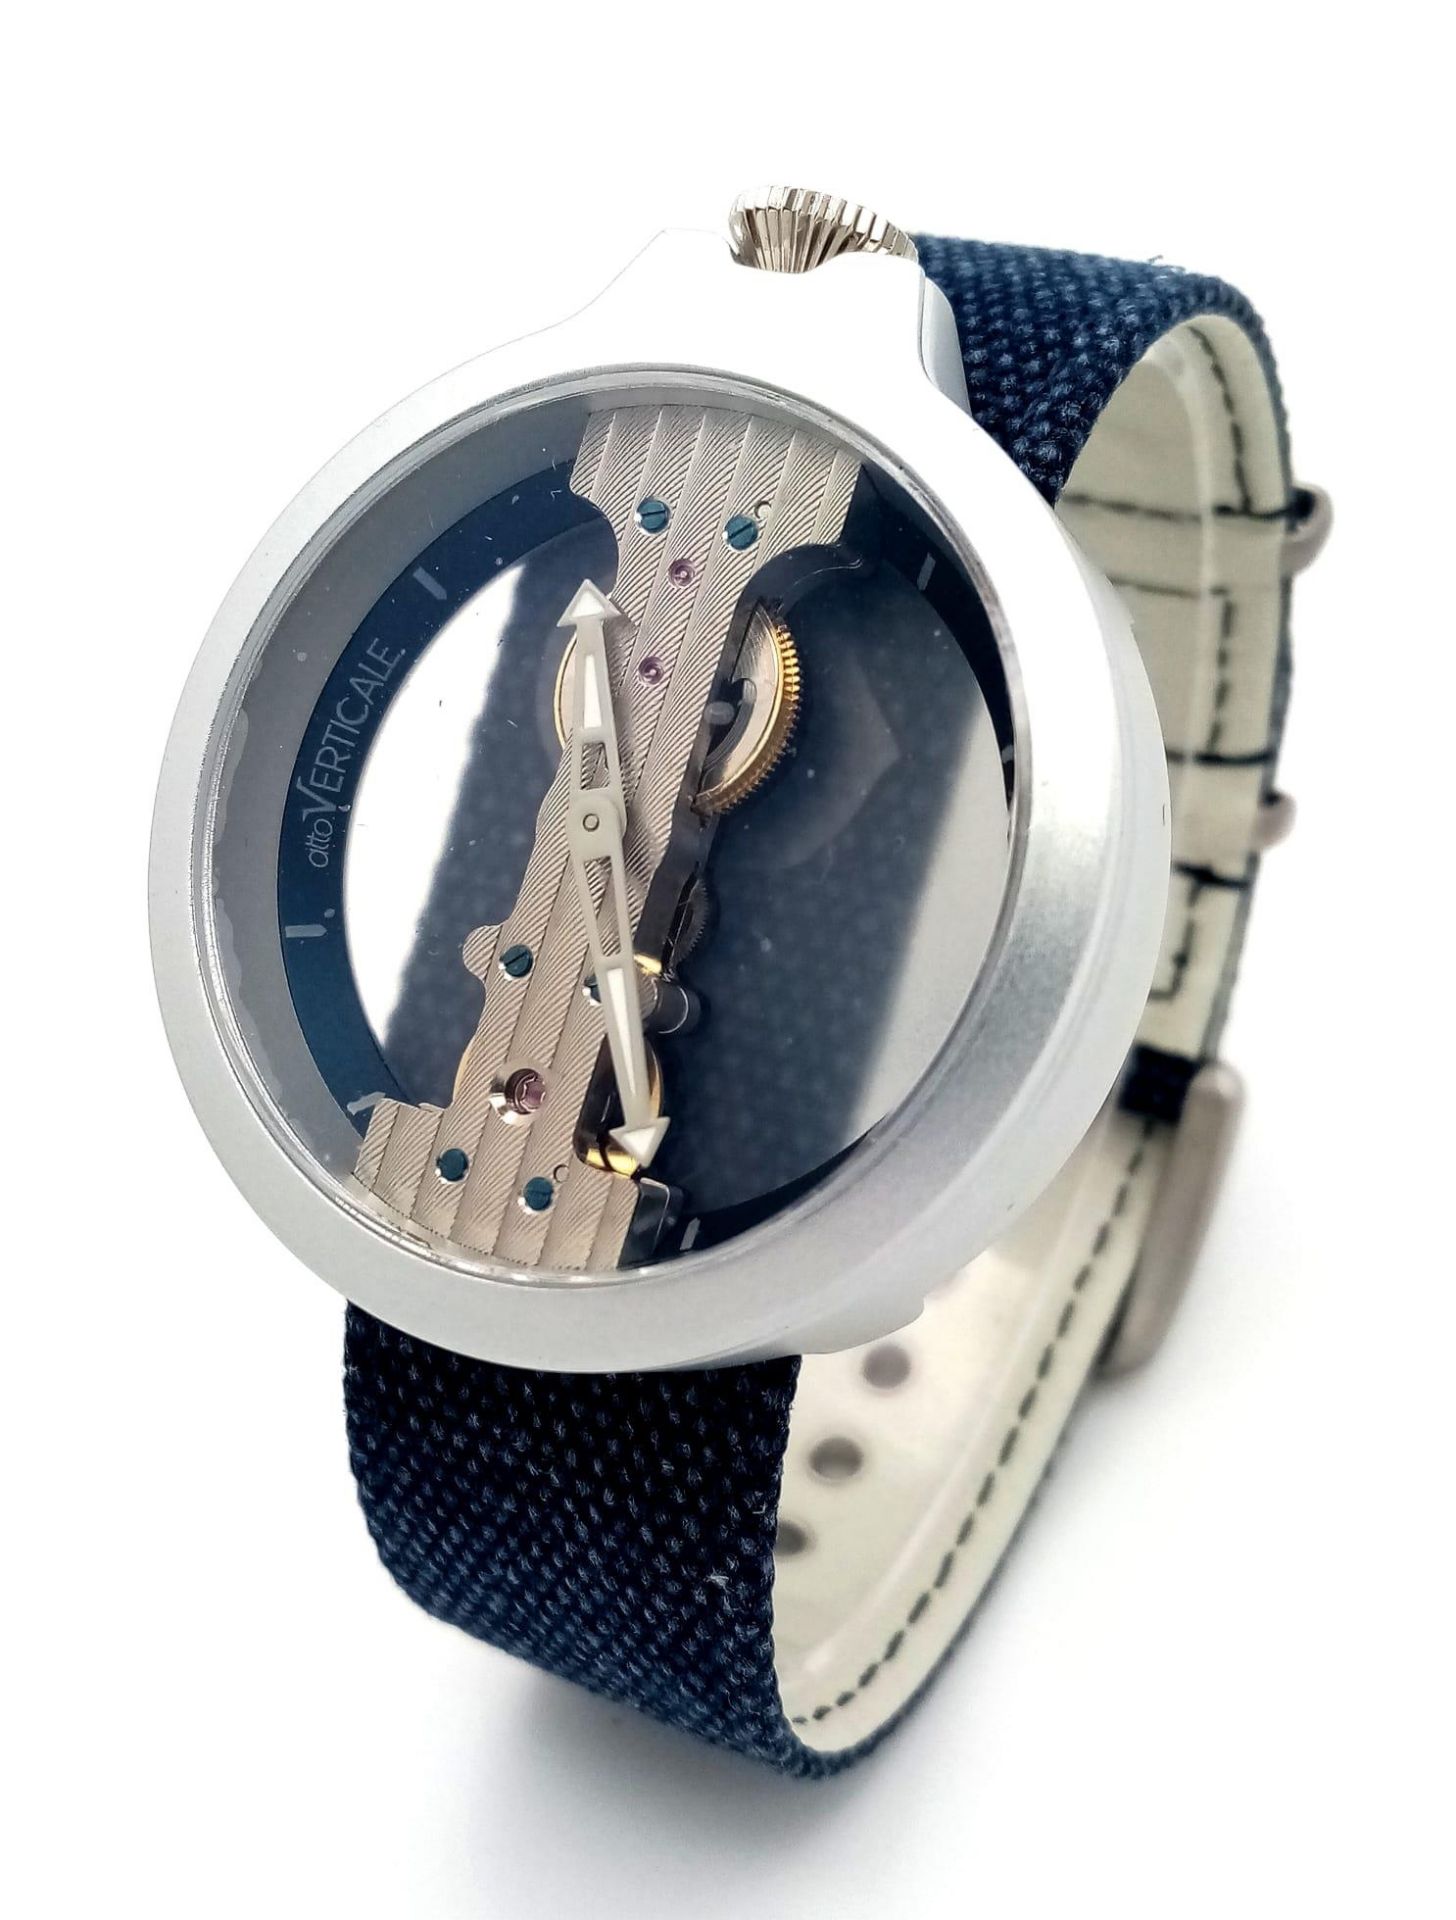 A Verticale Mechanical Top Winder Gents Watch. Blue Denim strap. Ceramic skeleton case - 42mm. As